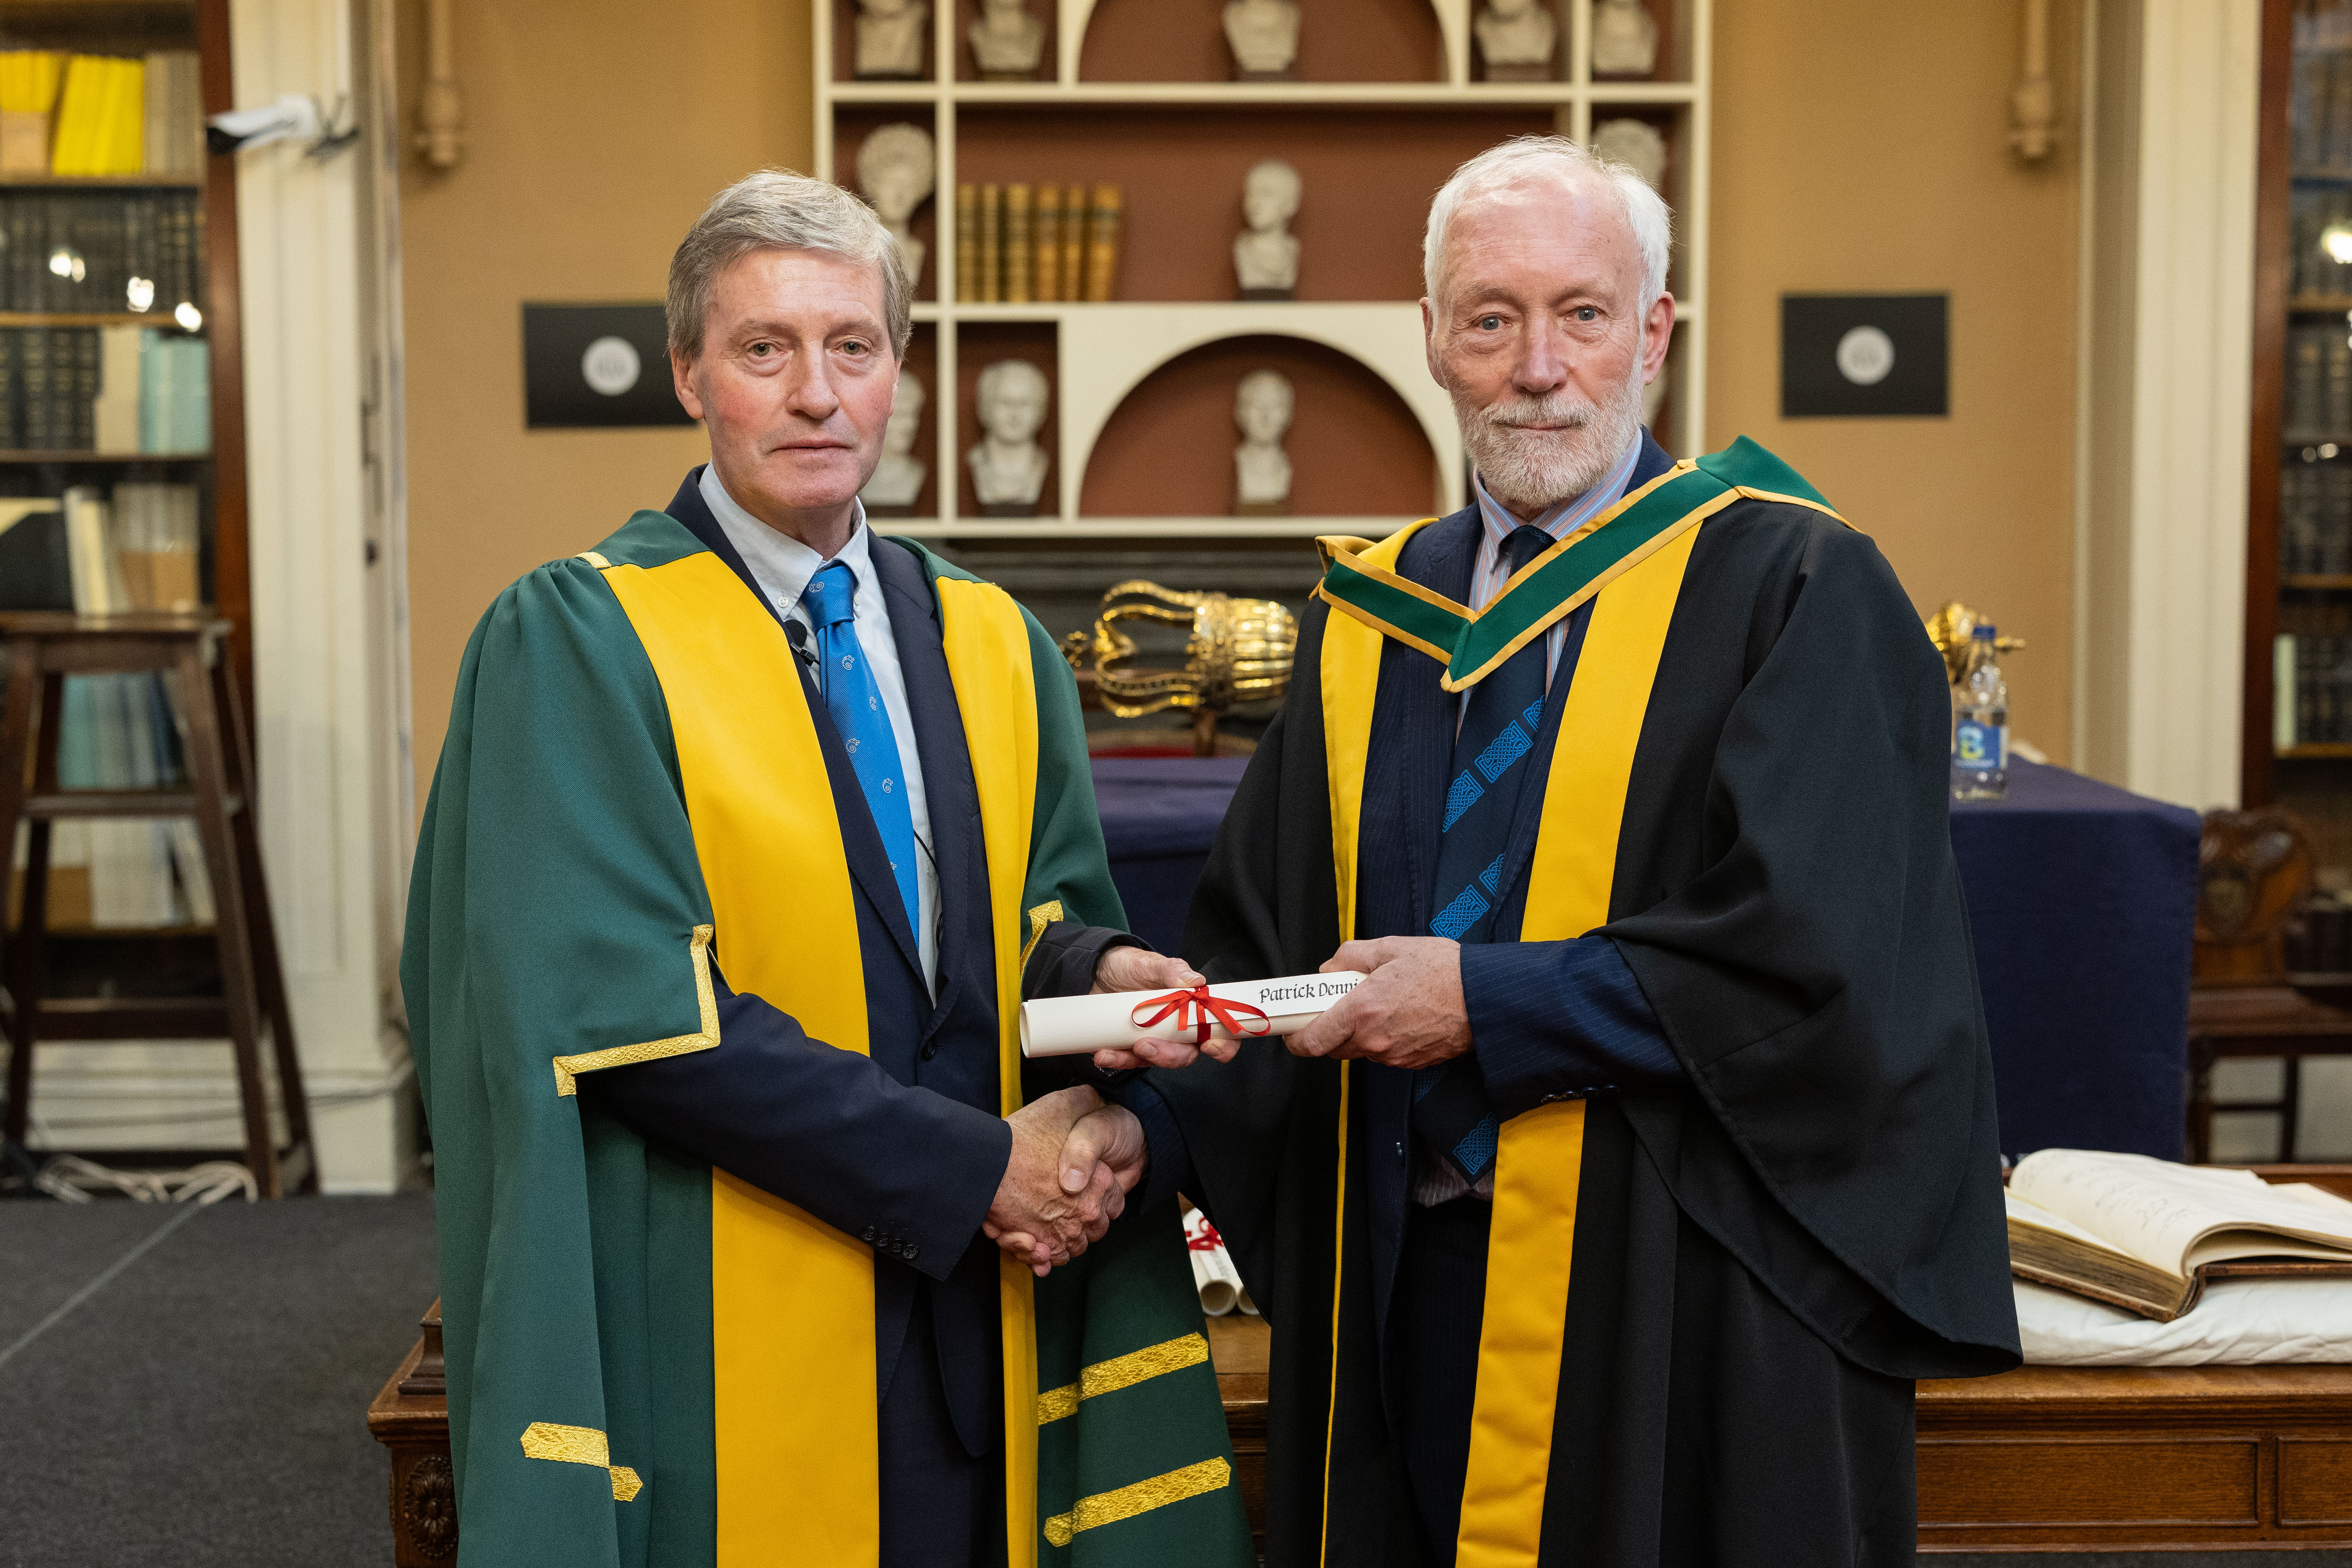 Professor Pat Guiry conferring membership of the Royal Irish Academy upon Professor Patrick McGorry AO